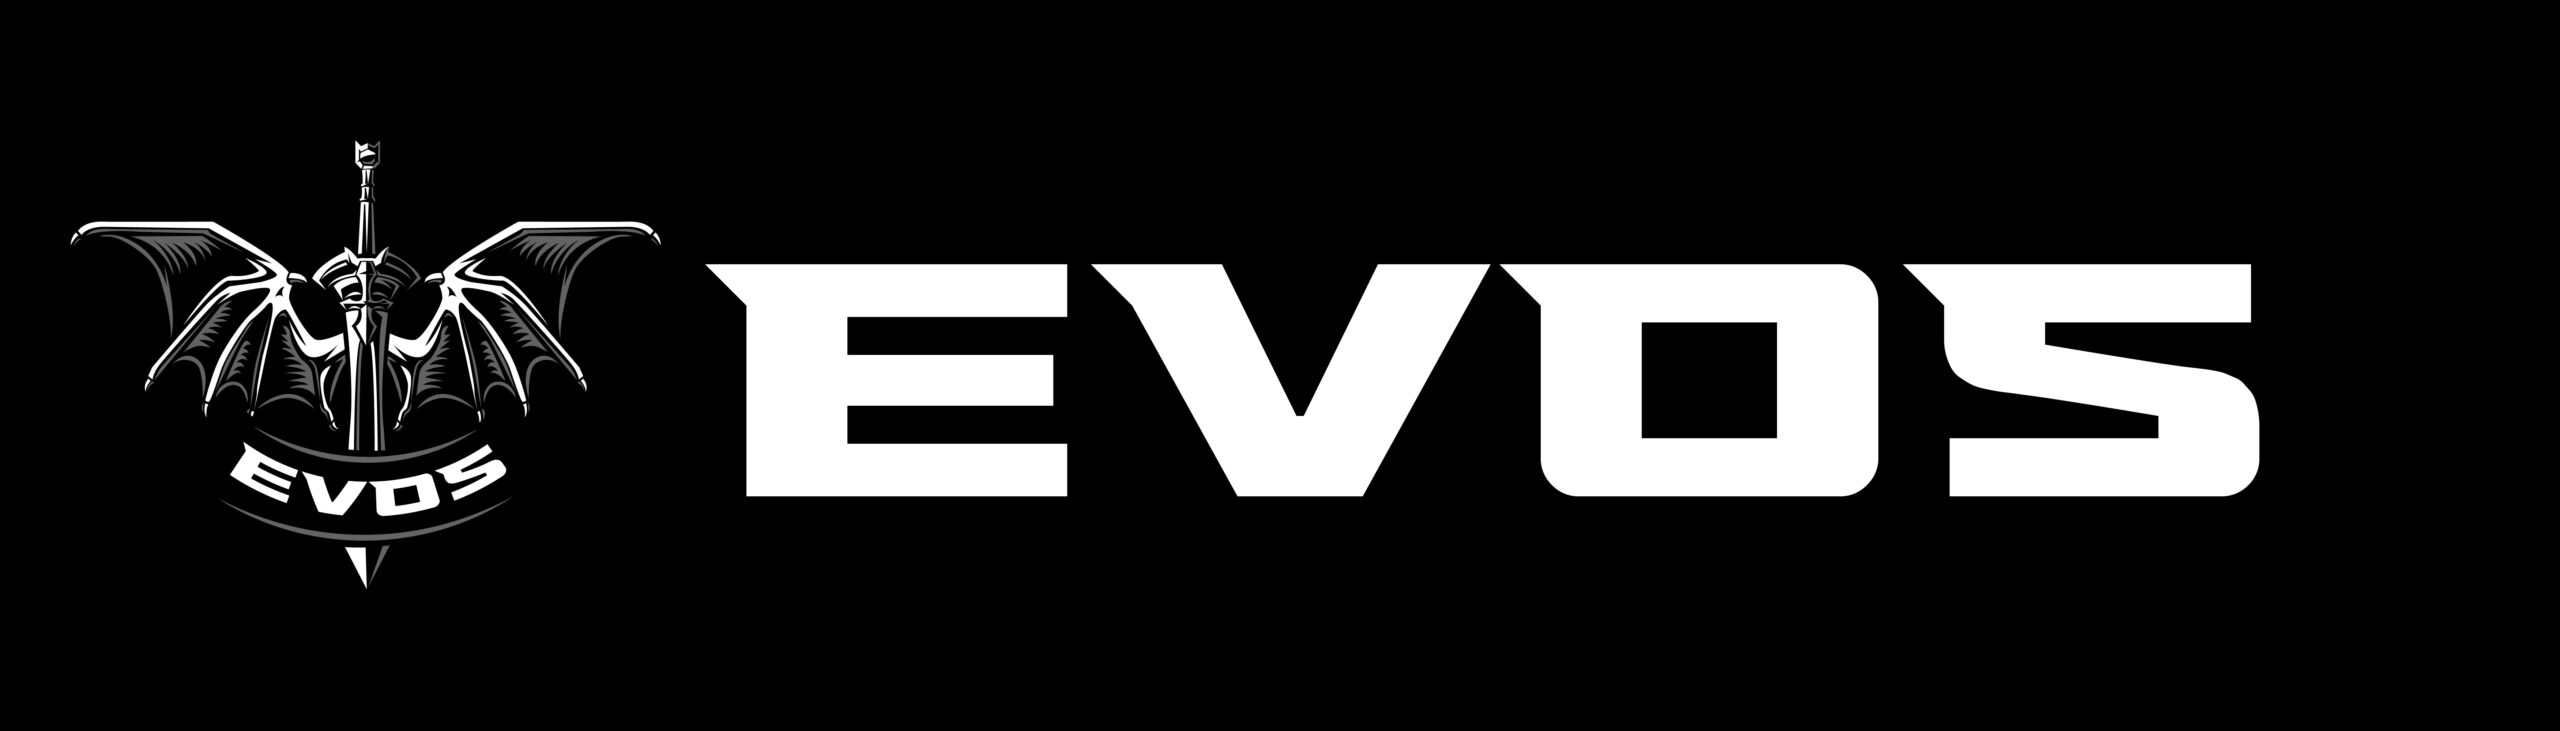 Evos Services Ltd.